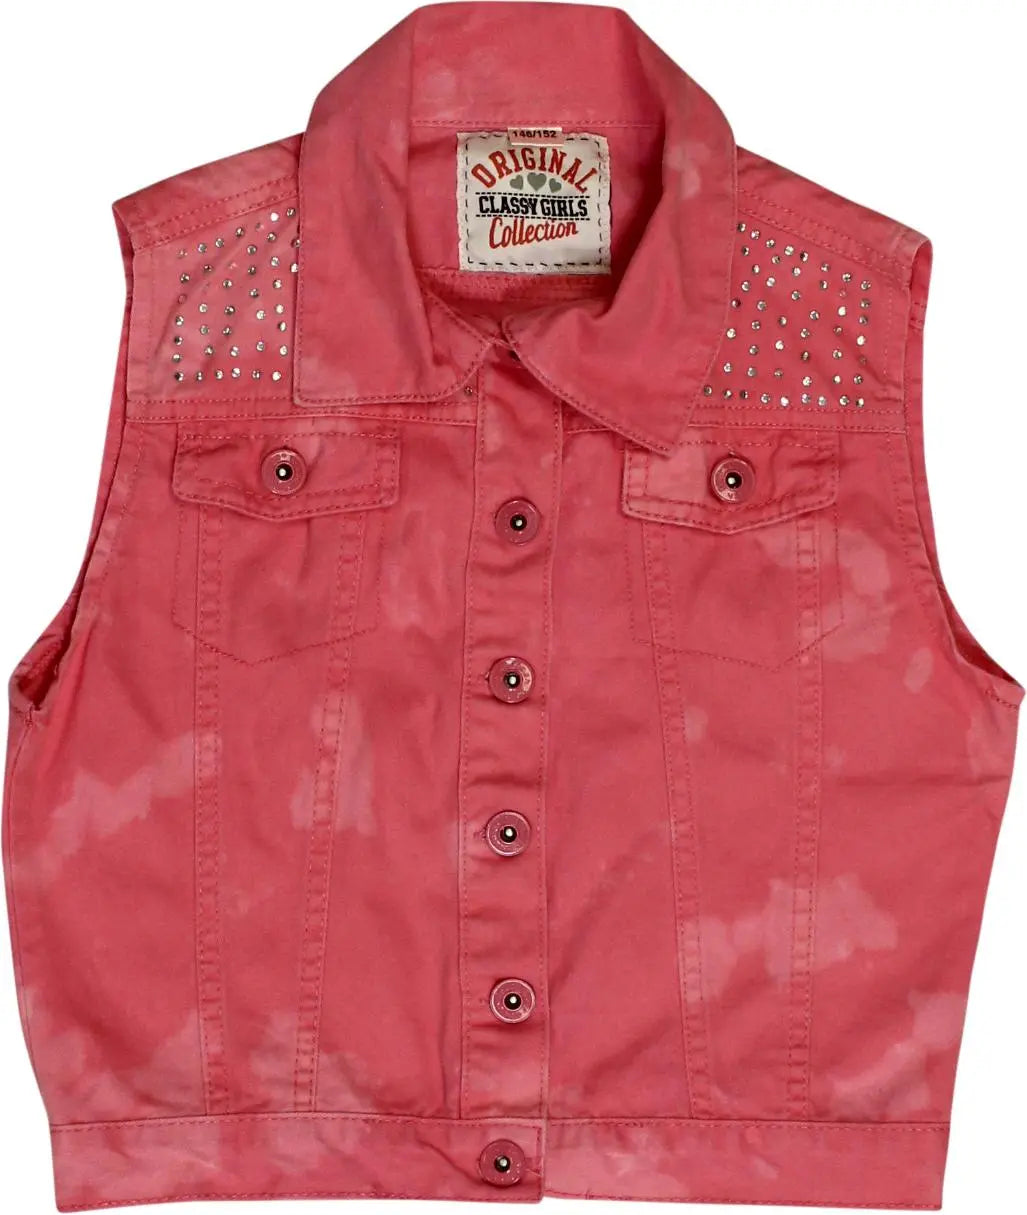 Driginal - Pink Sleeveless Denim Jacket- ThriftTale.com - Vintage and second handclothing